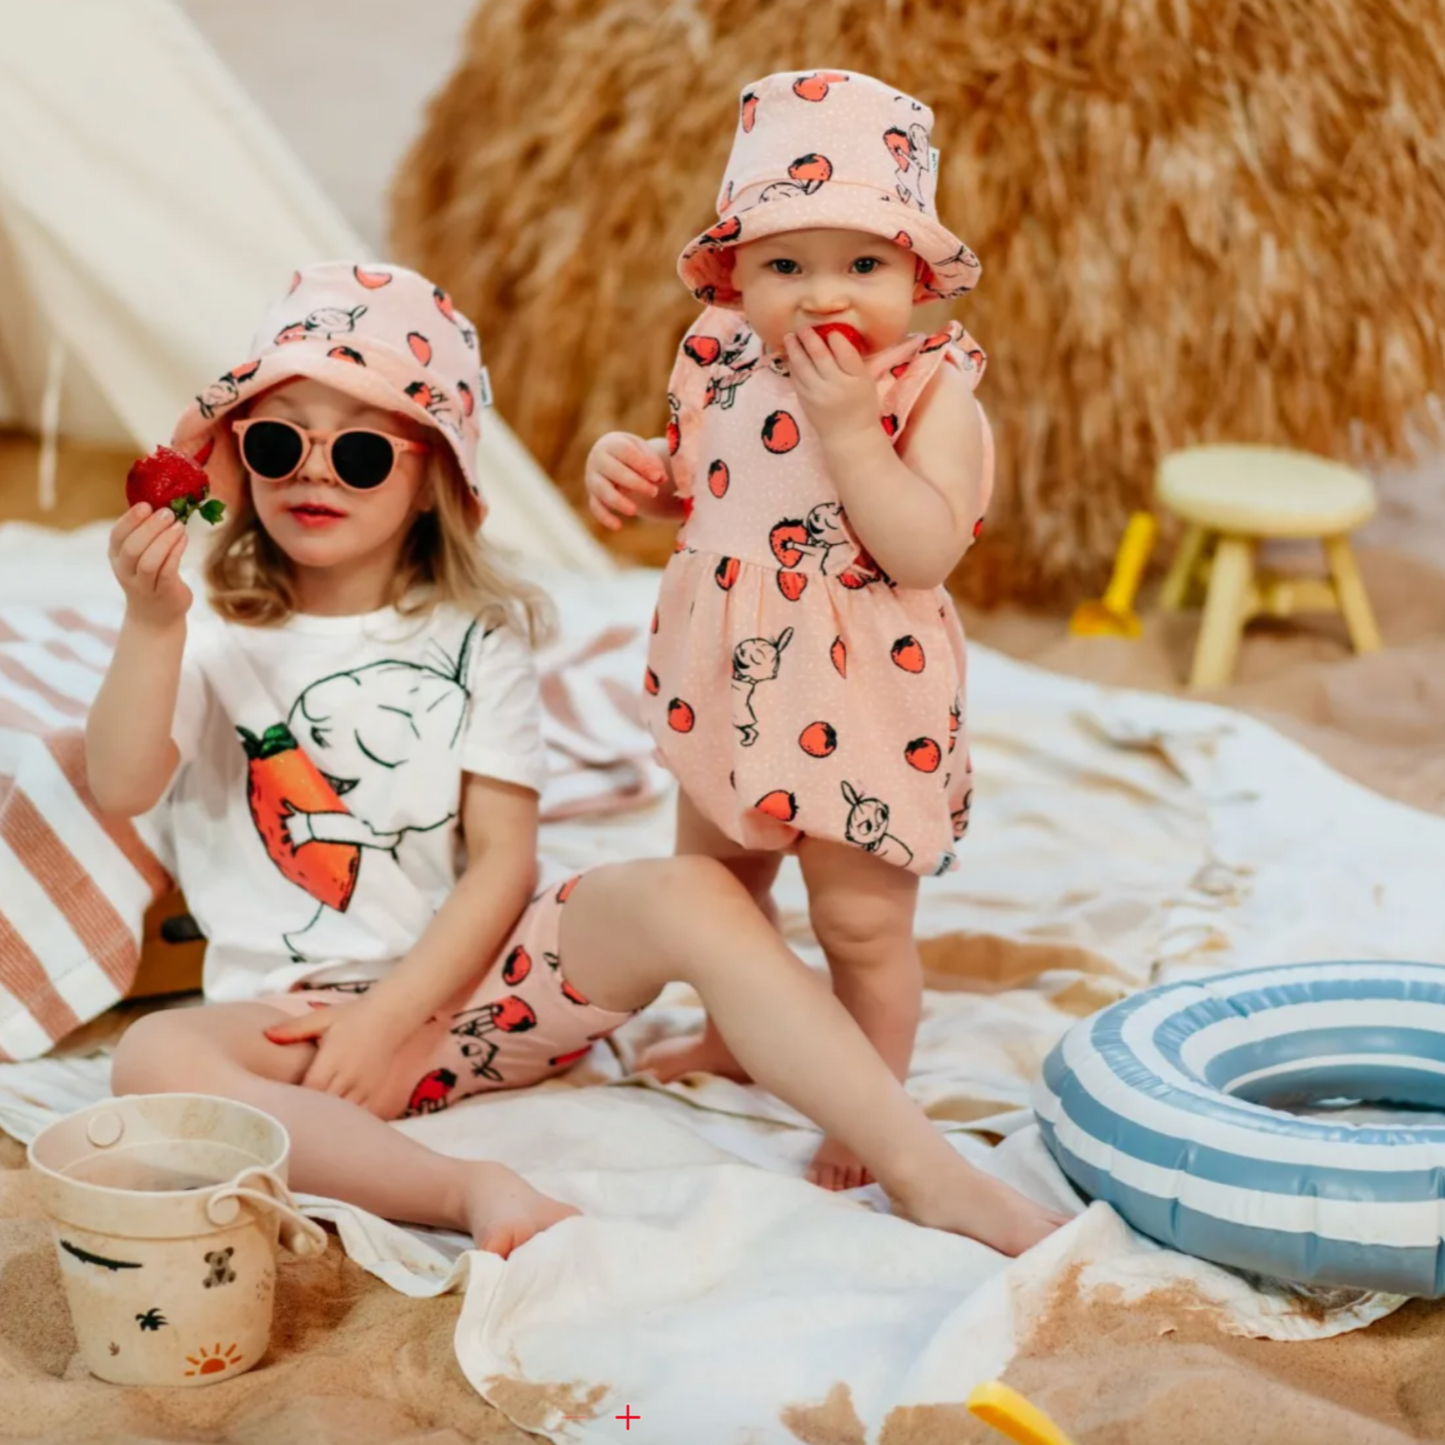 Moomin Baby Hat, Strawberry (8605258285343)